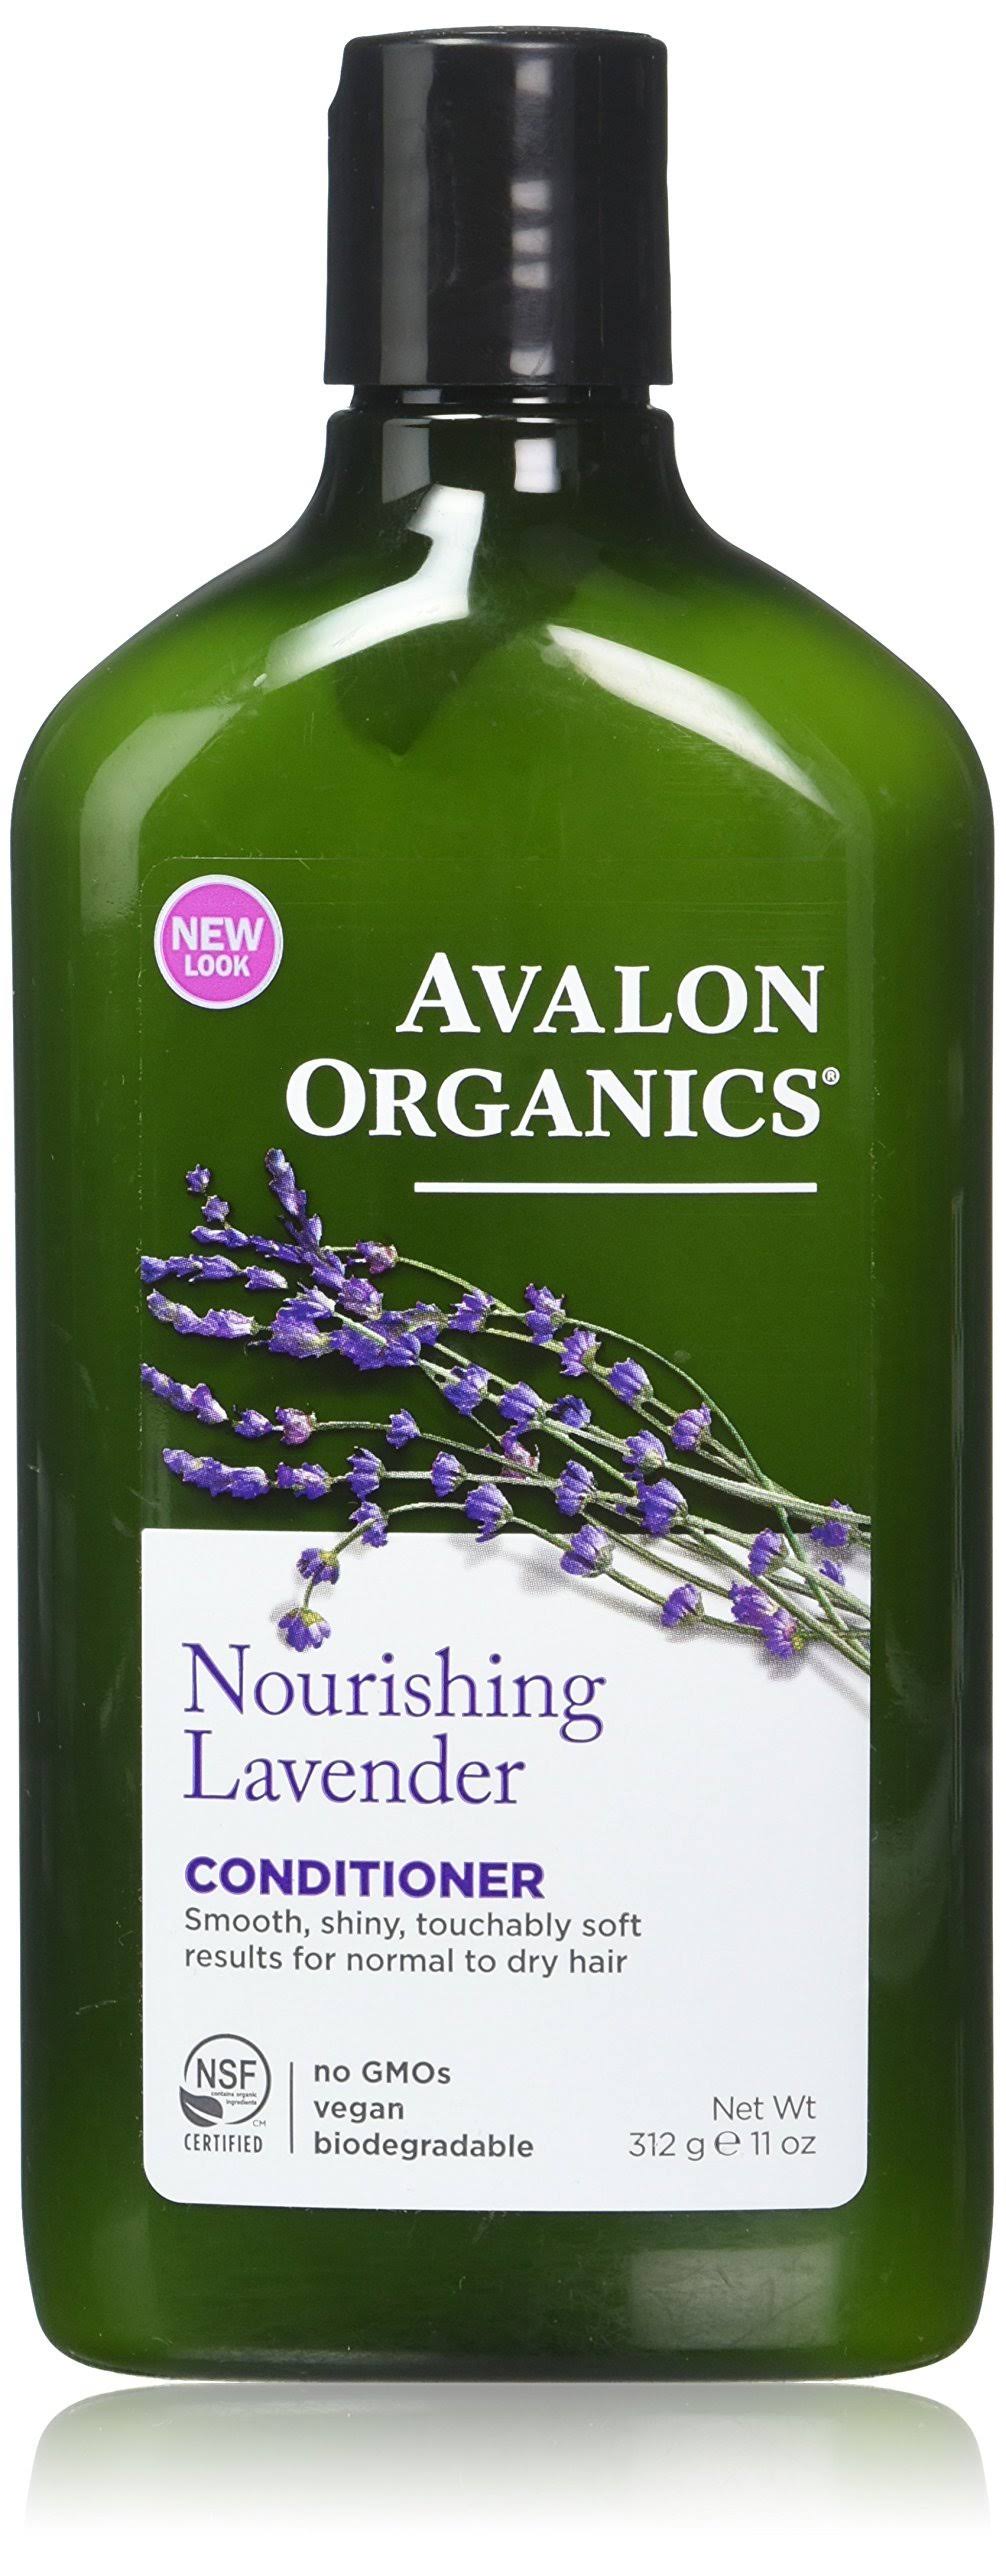 Avalon Organics Nourishing Lavender Conditioner - 11 fl oz bottle